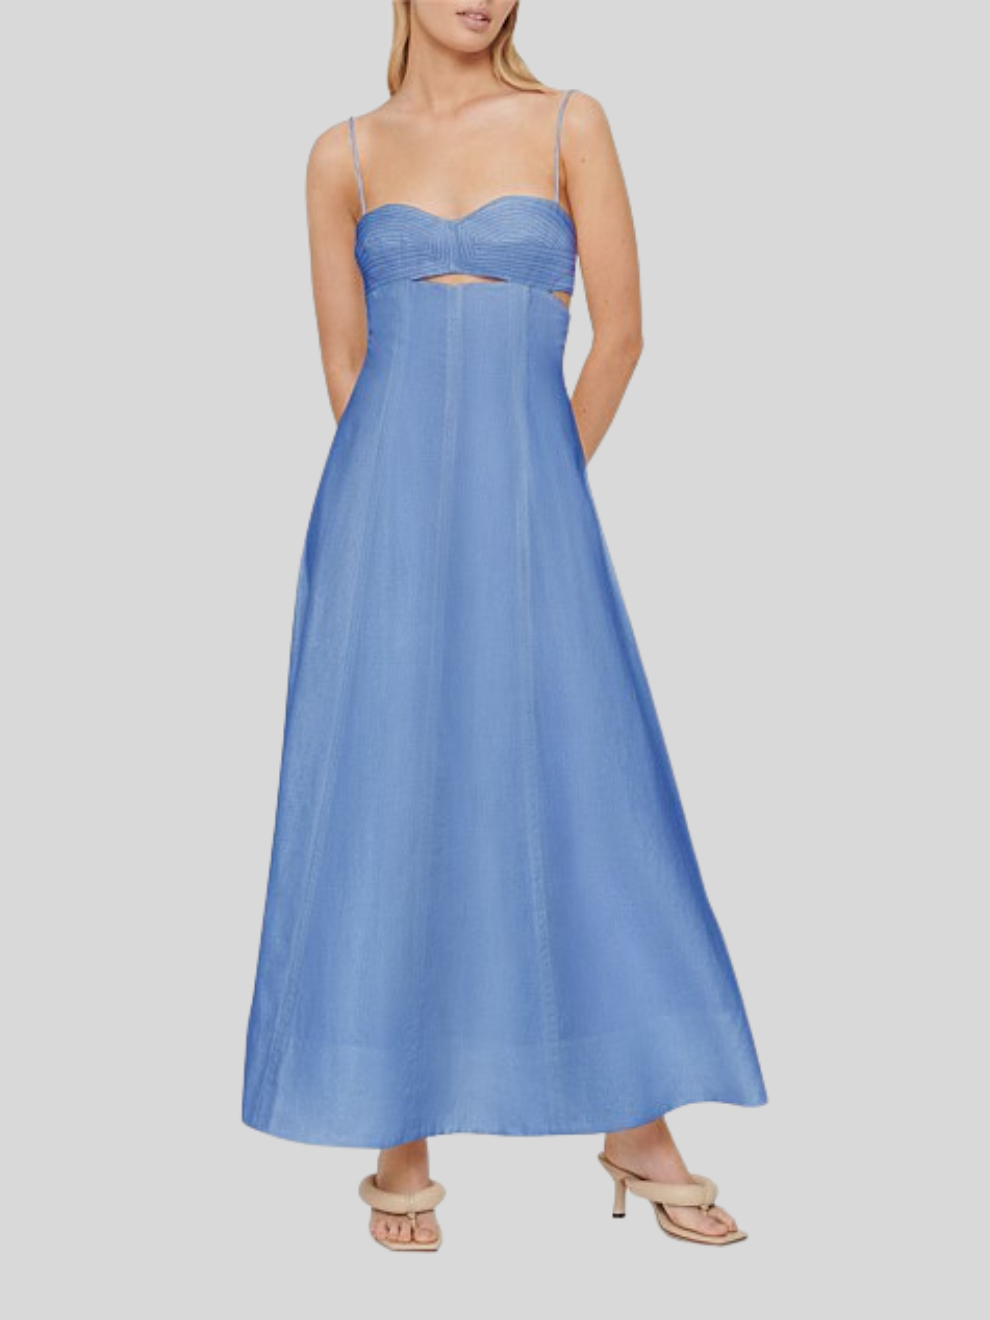 Florence Stitch Dress in Marina